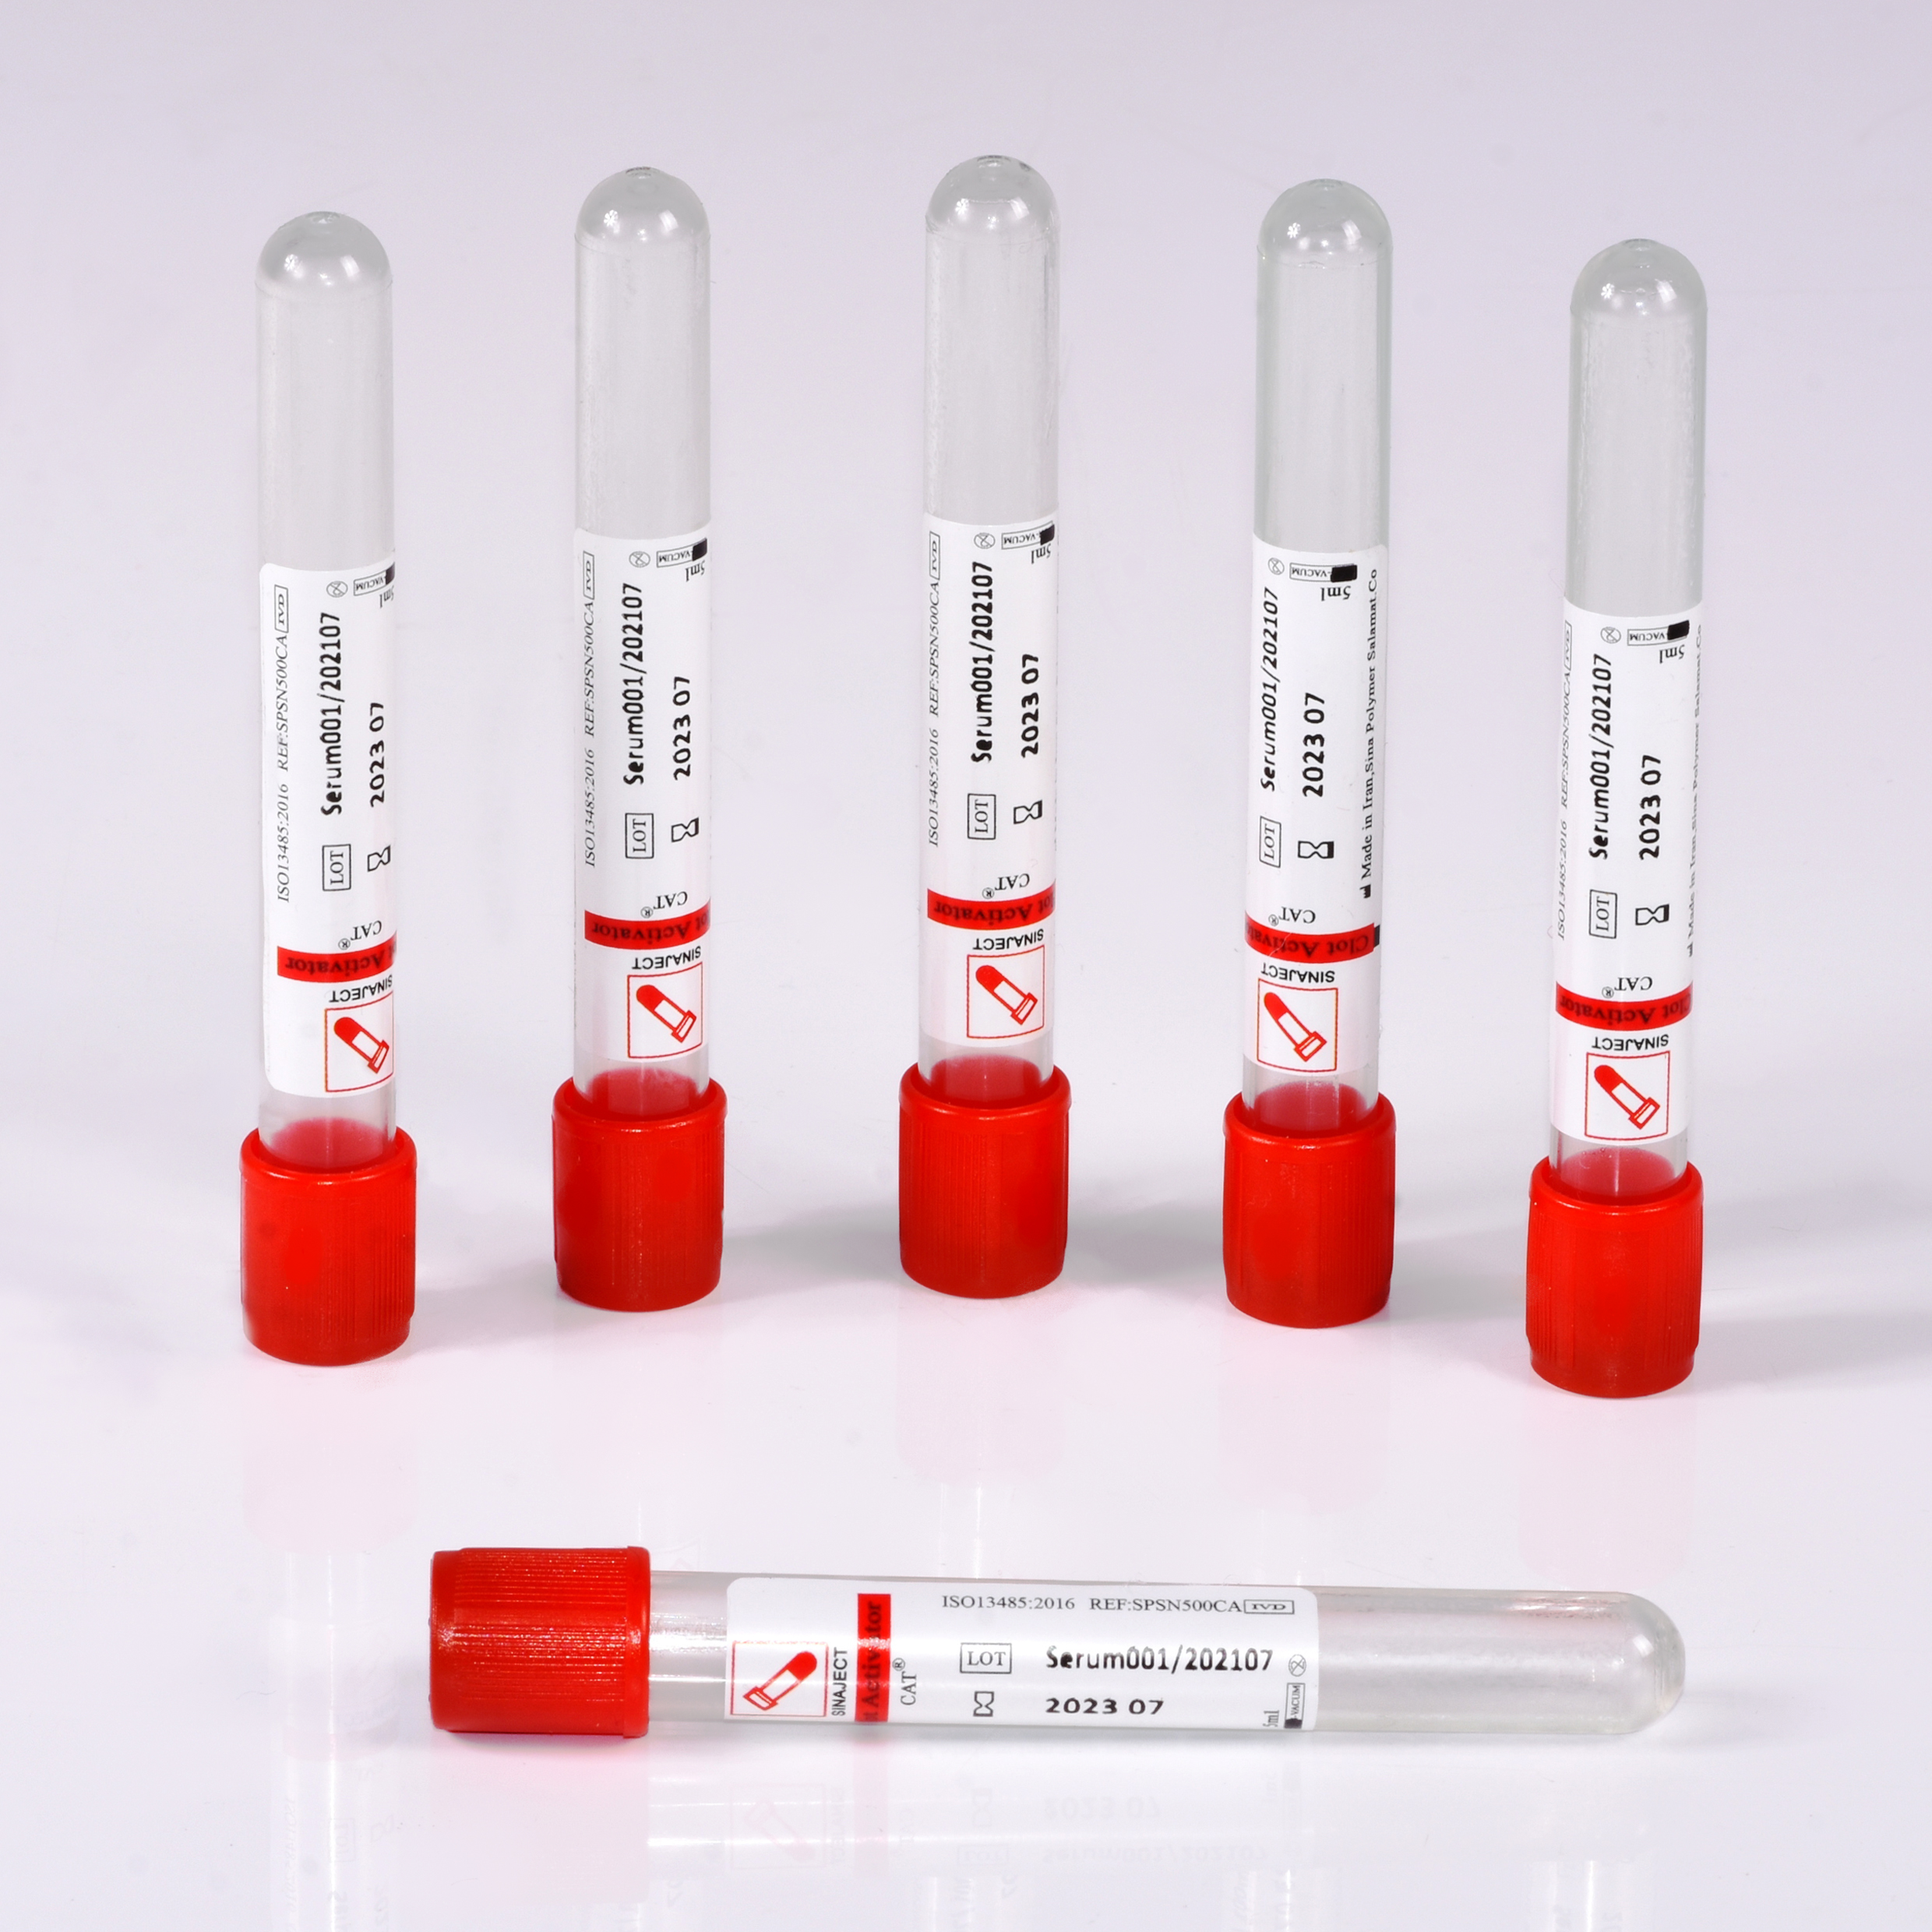  لوله خونگیرییSERUM 12*100 وکیوم  (لخته خون بدون ژل) - VACUM- CLOT ACTIVATOR 12*100   PET  - SINAJECT - مصرفی - بیوشیمی - سینا پلیمر سلامت 